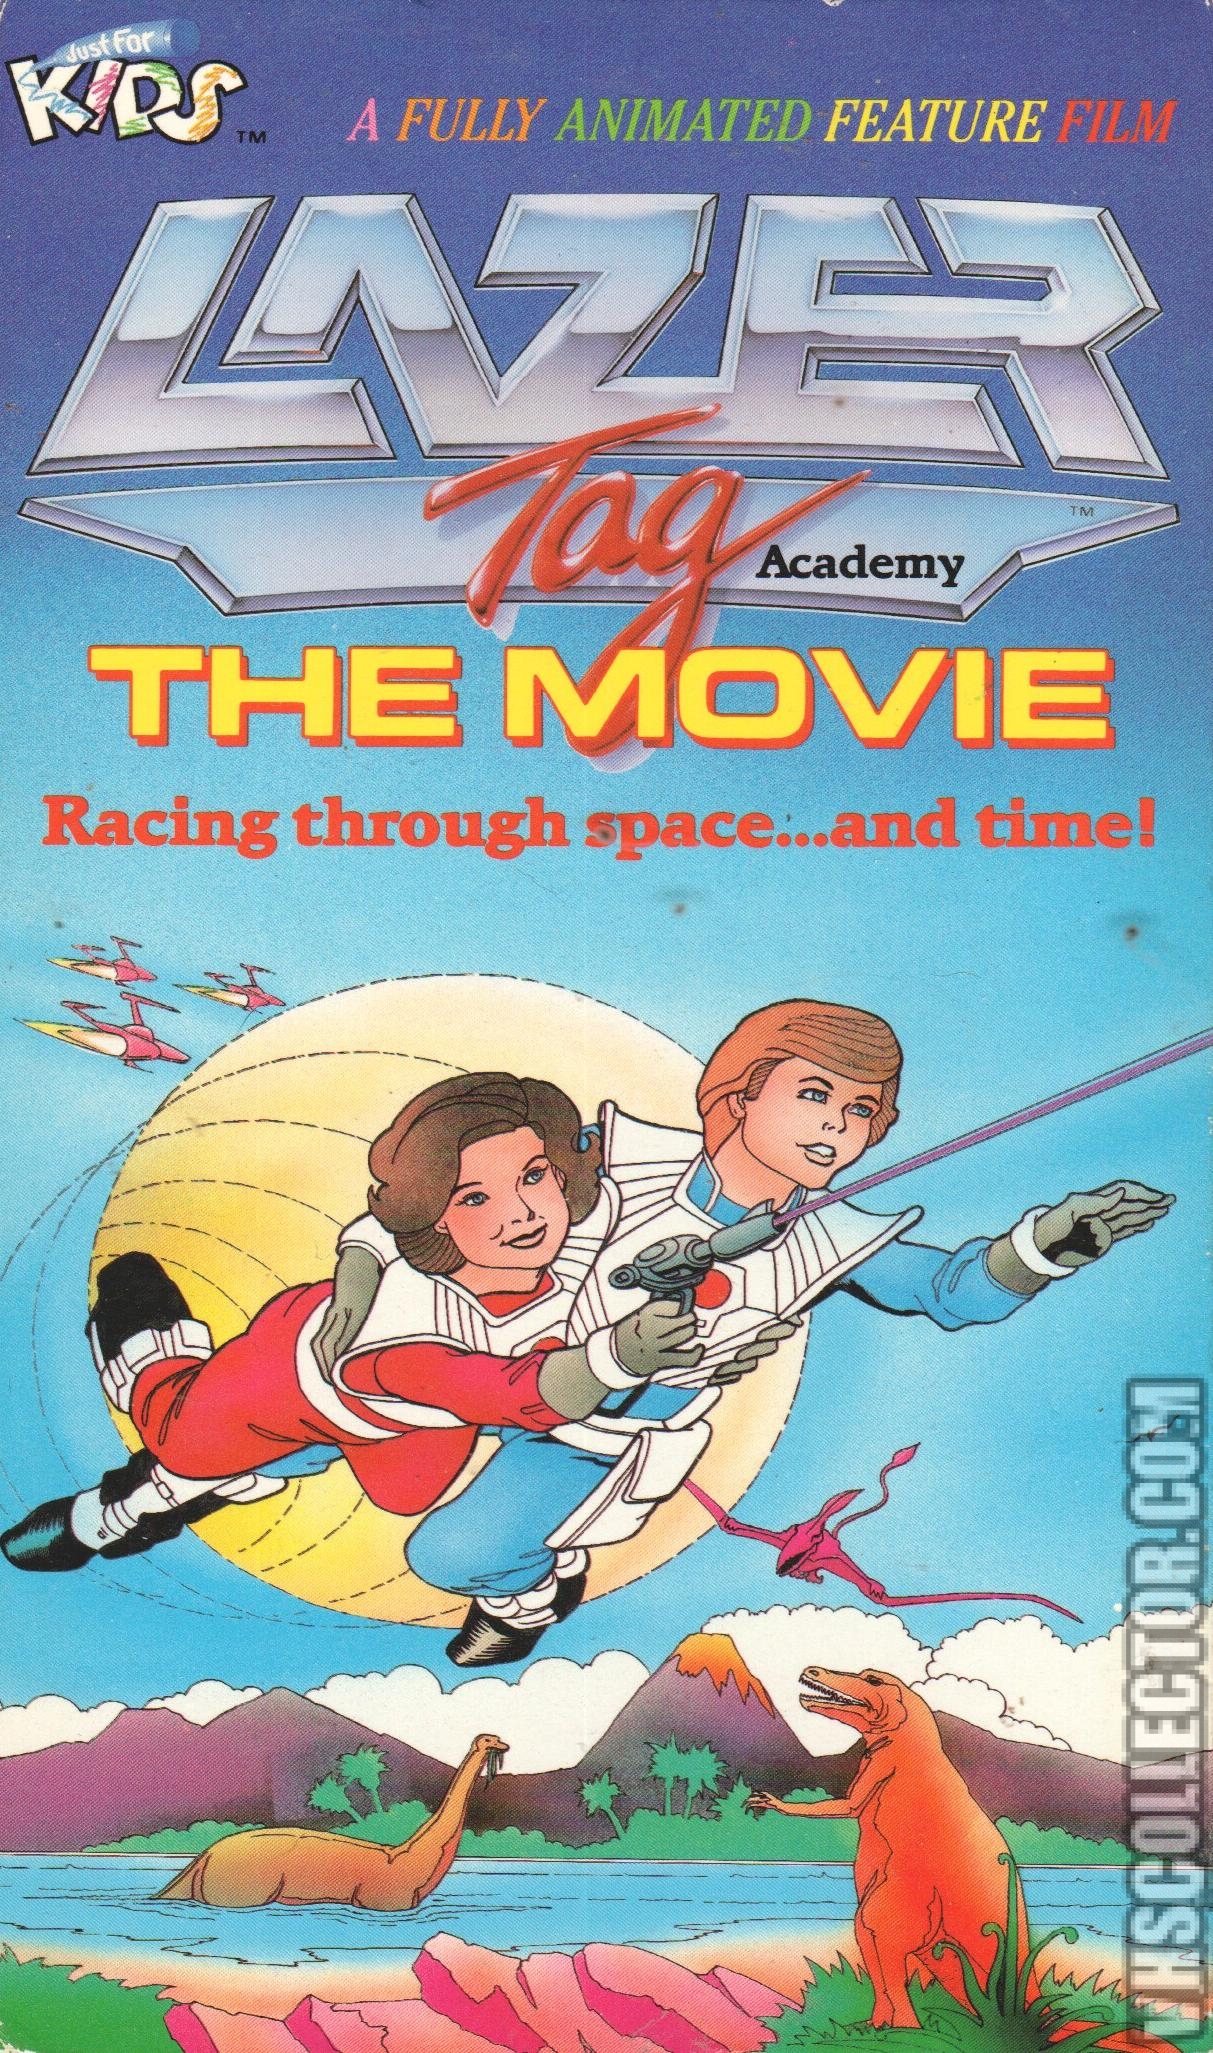 Lazer Tag Academy: The Movie | VHSCollector.com